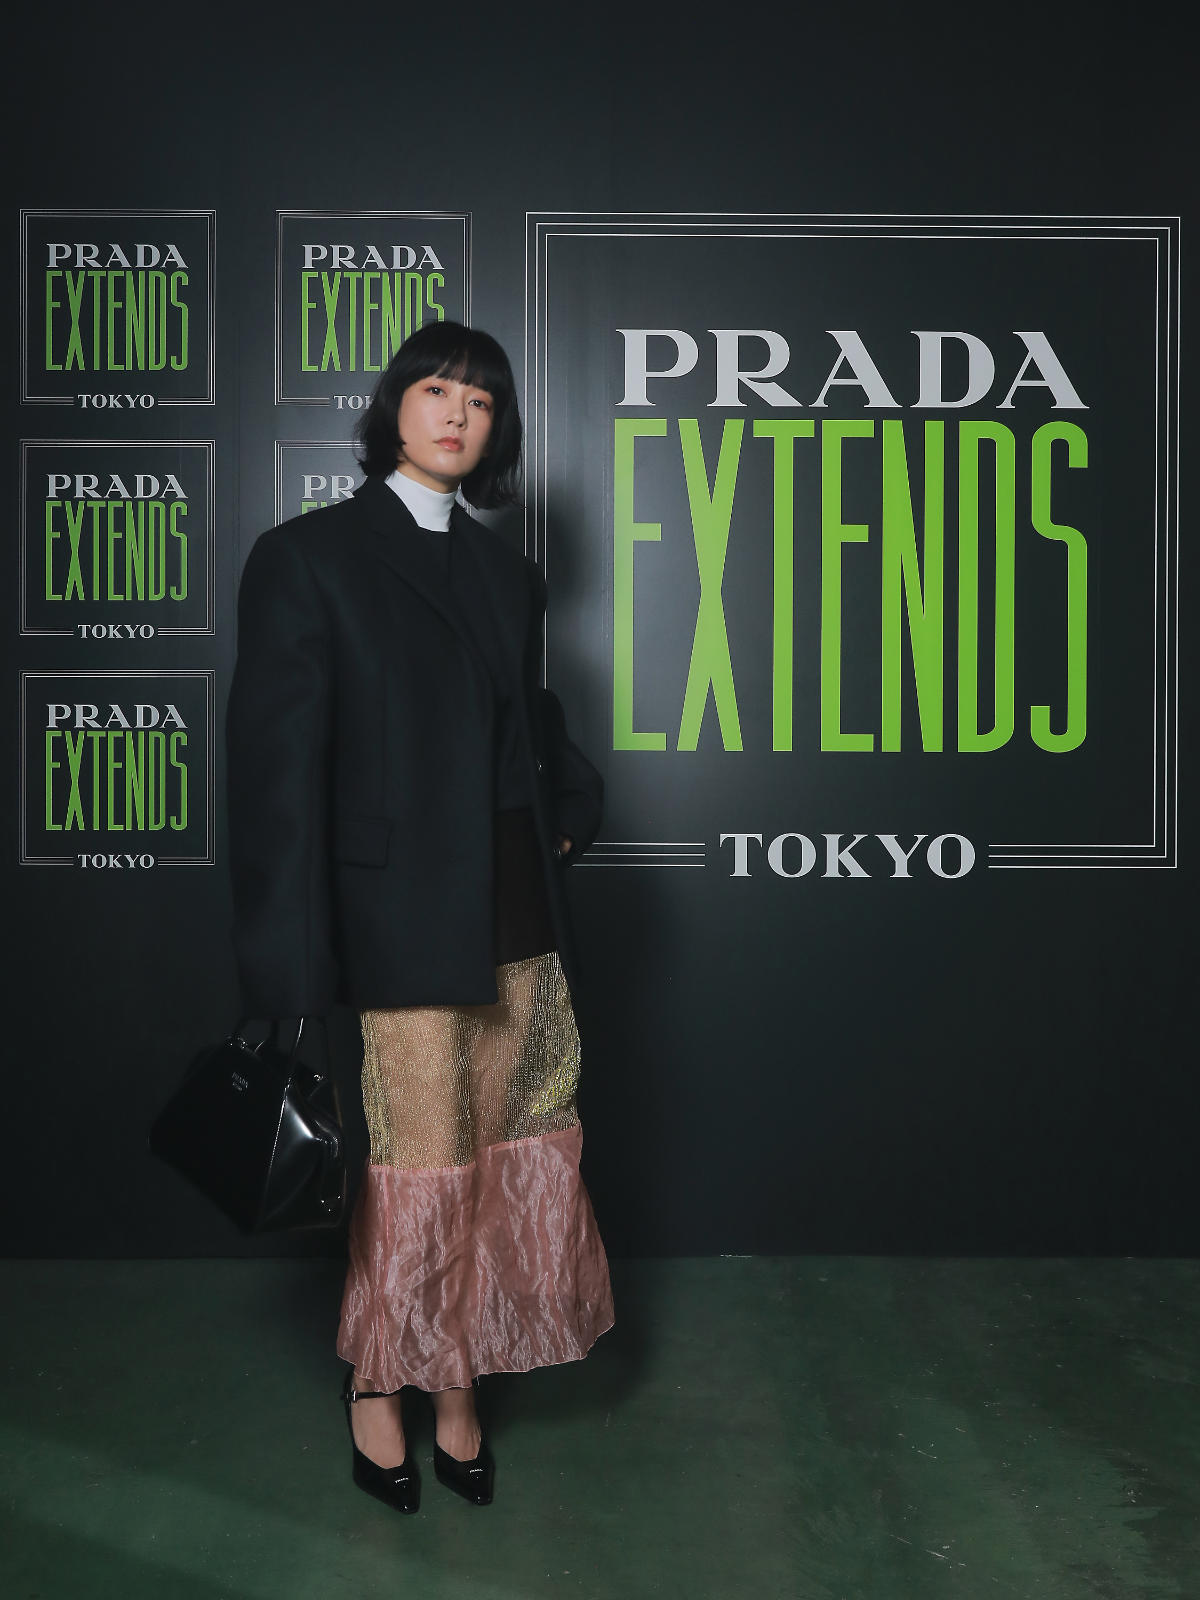 Aqua: New Prada Pop-up at Isetan, Tokyo - Luxferity Magazine